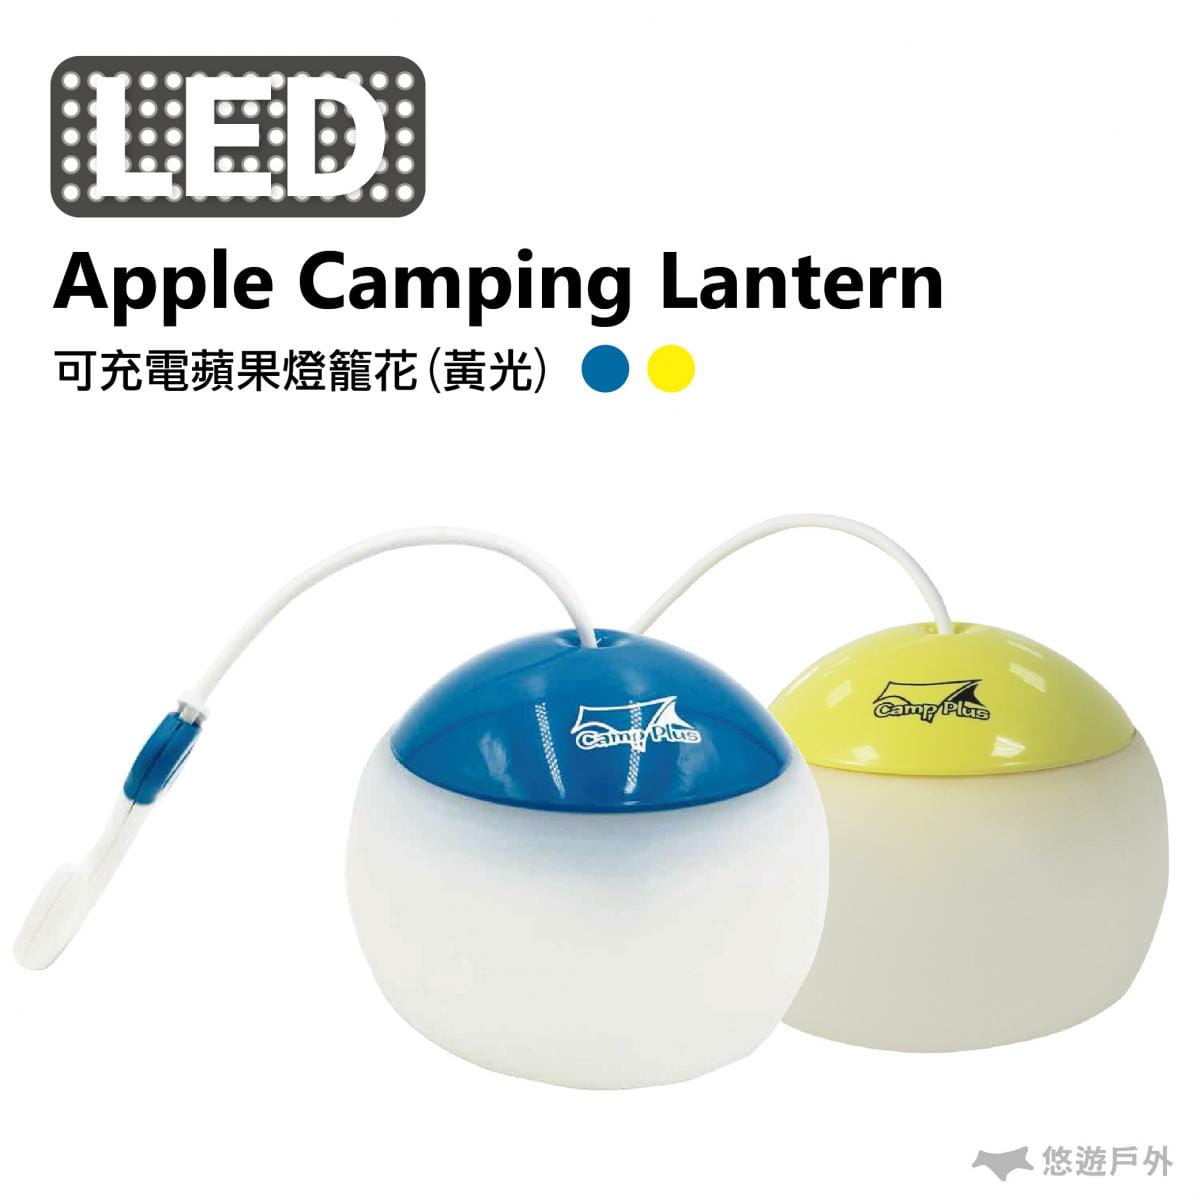 【Camp Plus】【全新上市】第三代 Camp plus 充電式蘋果燈籠花黃光 1